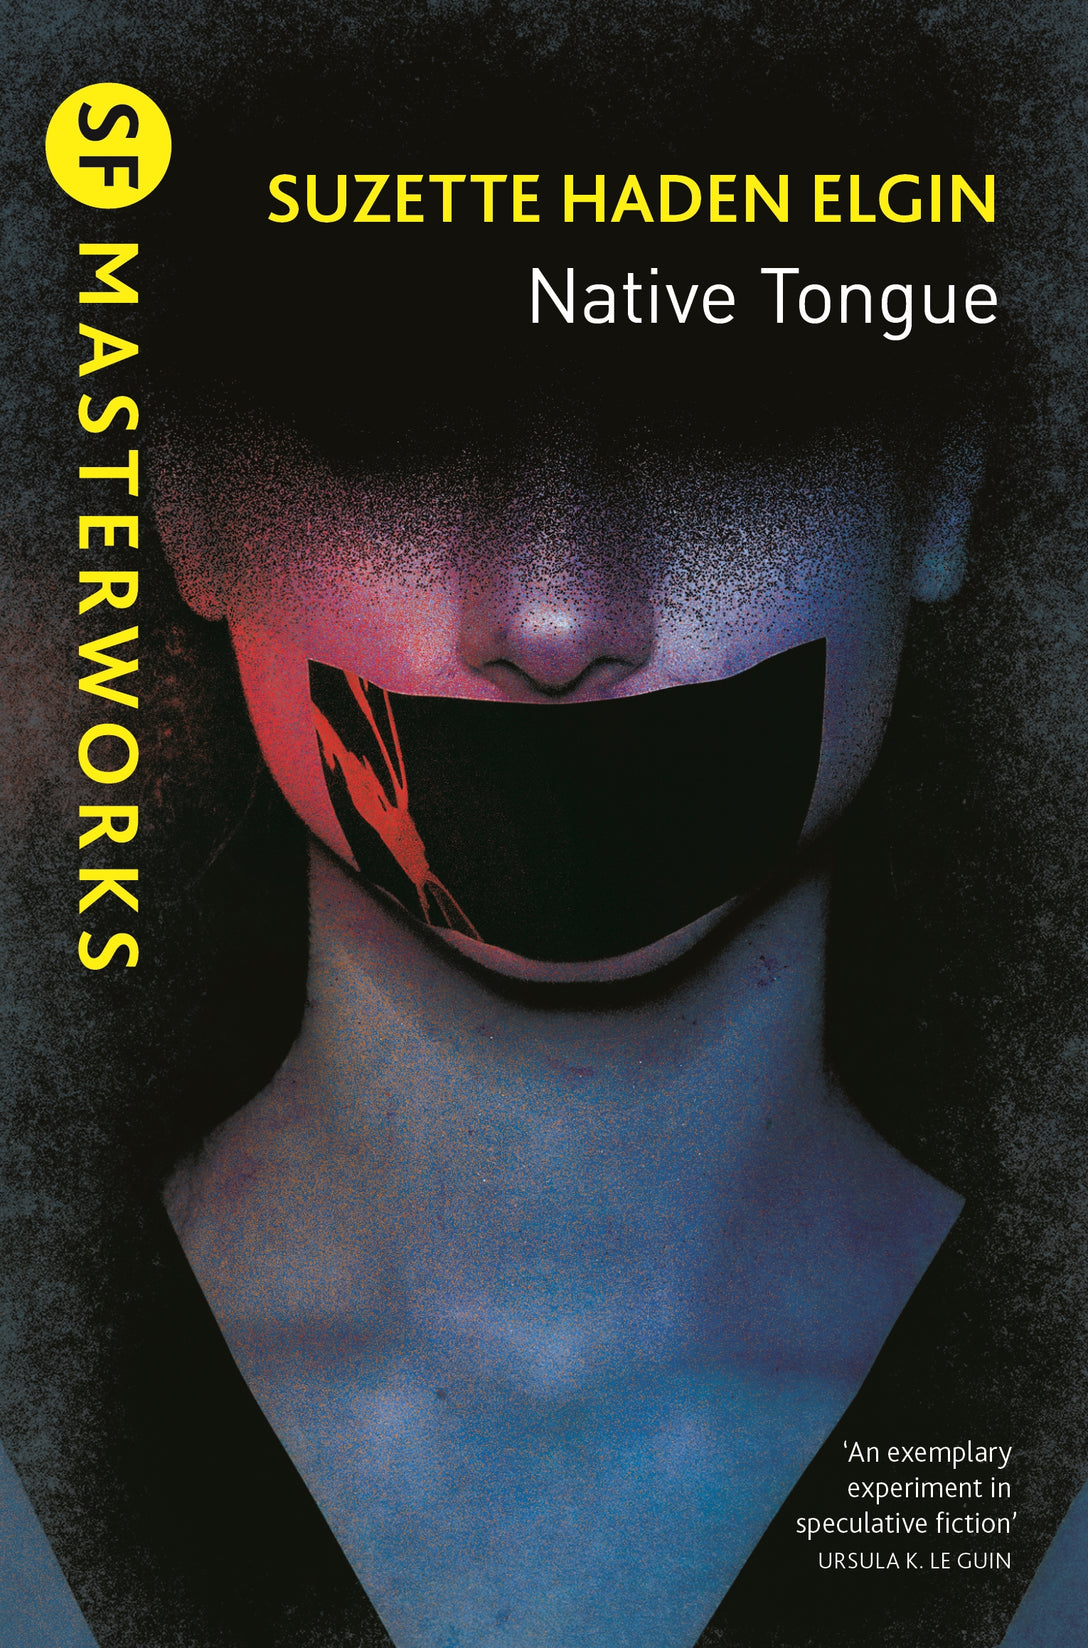 Native Tongue by Suzette Haden Elgin